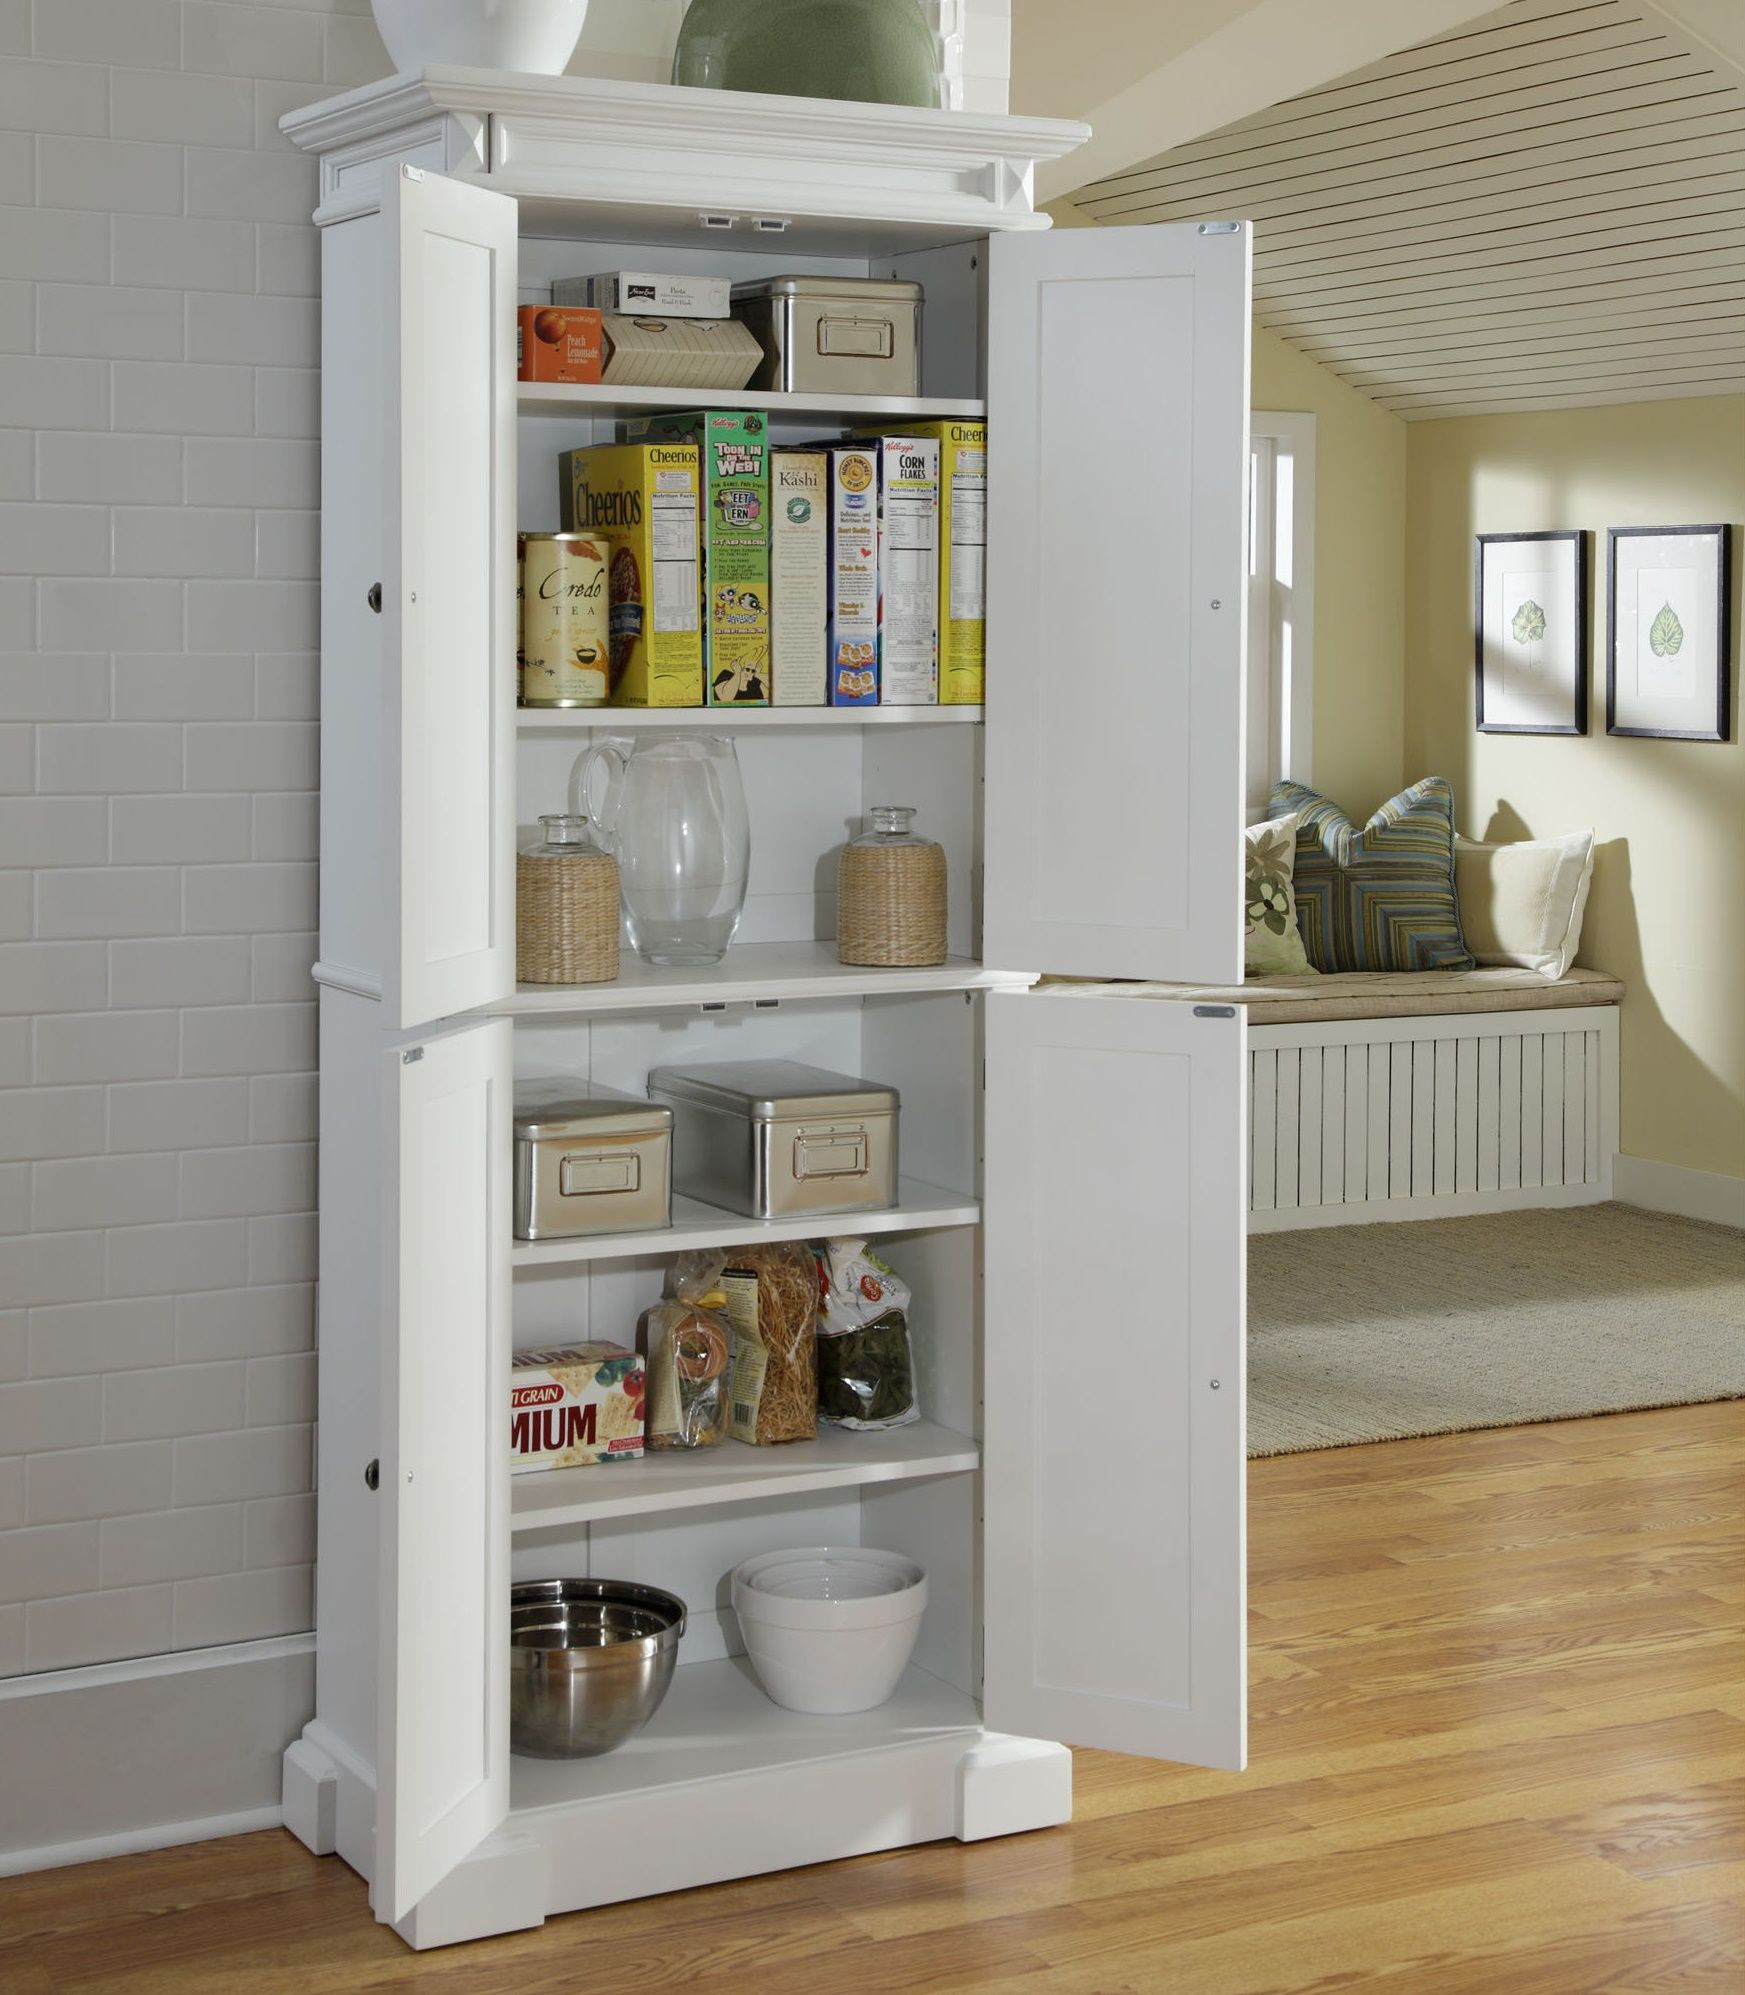 Lowes Kitchen Organization
 Lowes Bathroom Storage Shelves Kitchen Pantry Cabinet